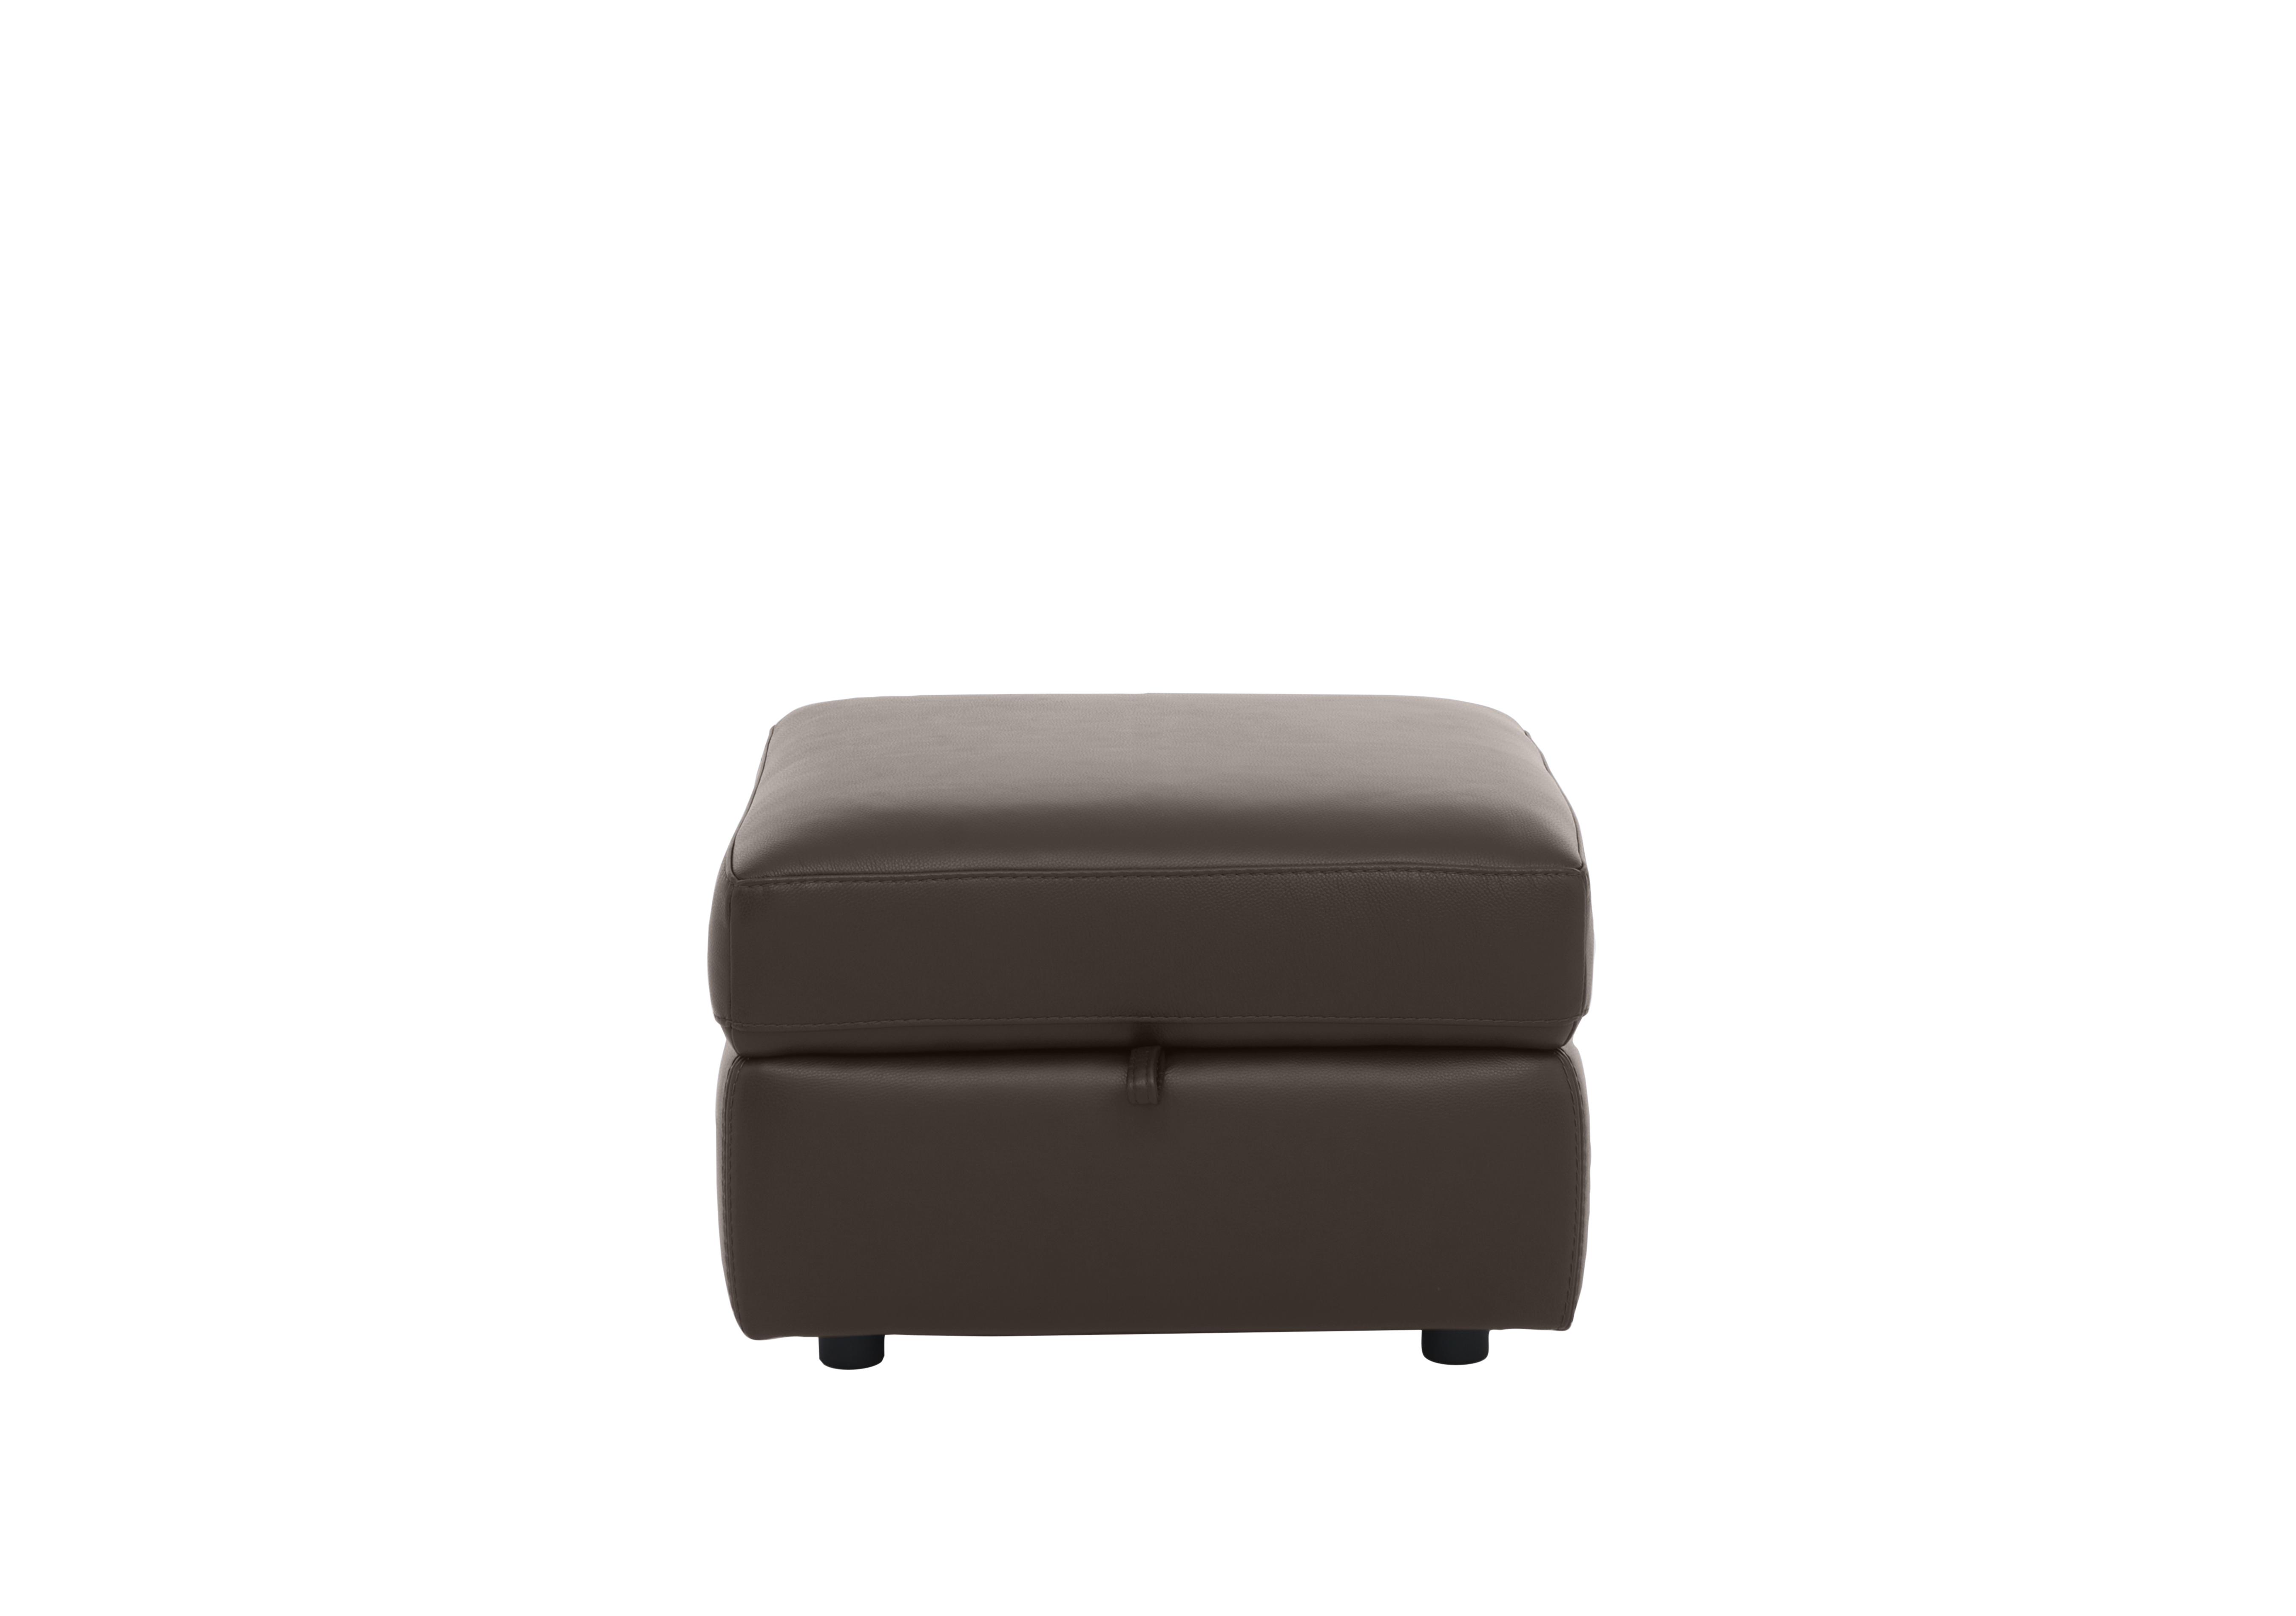 Leather Storage Footstool in Bx-037c Walnut on Furniture Village